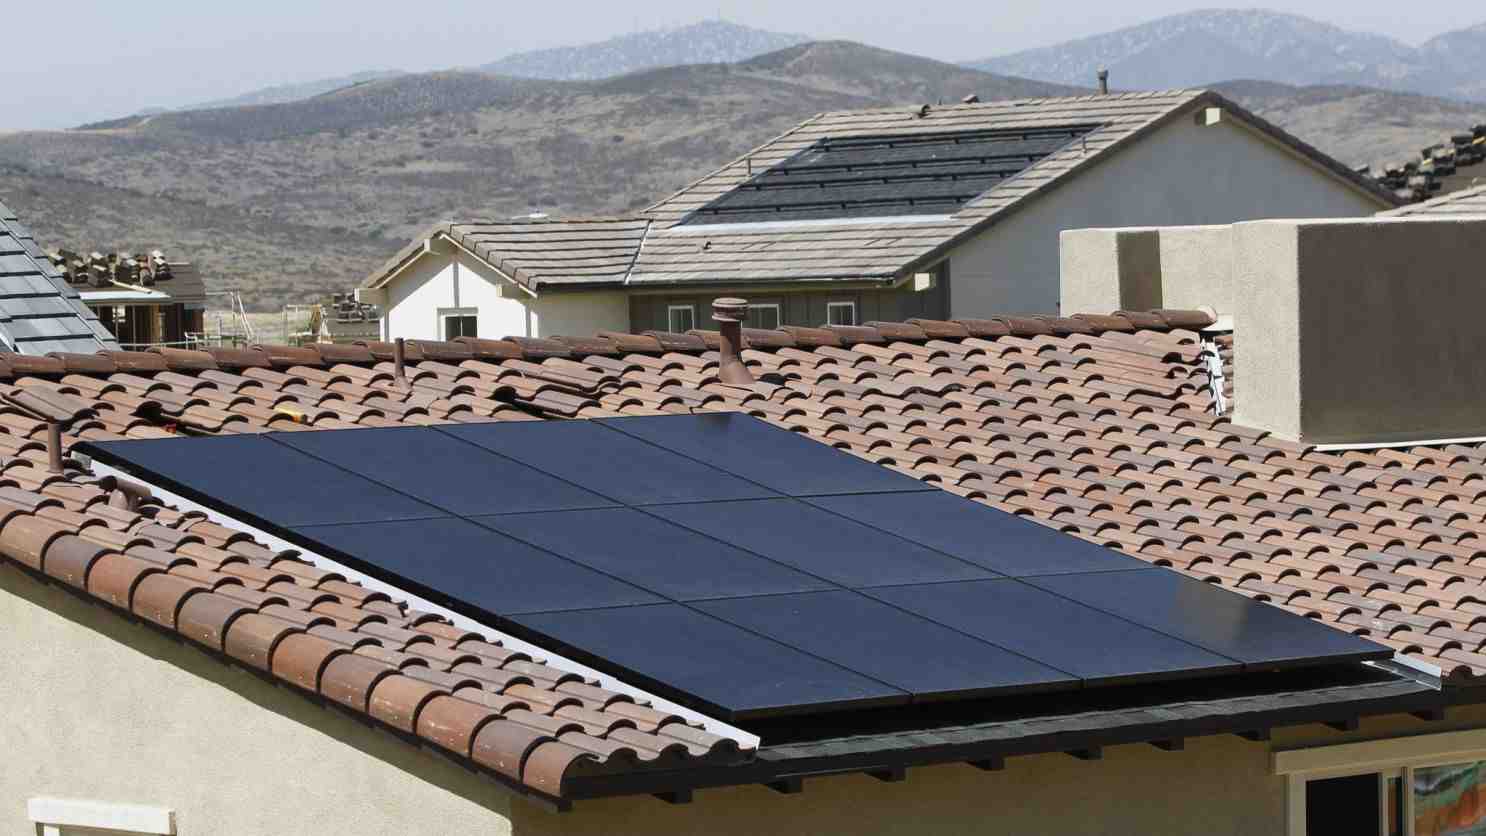 Who owns Freedom Solar?